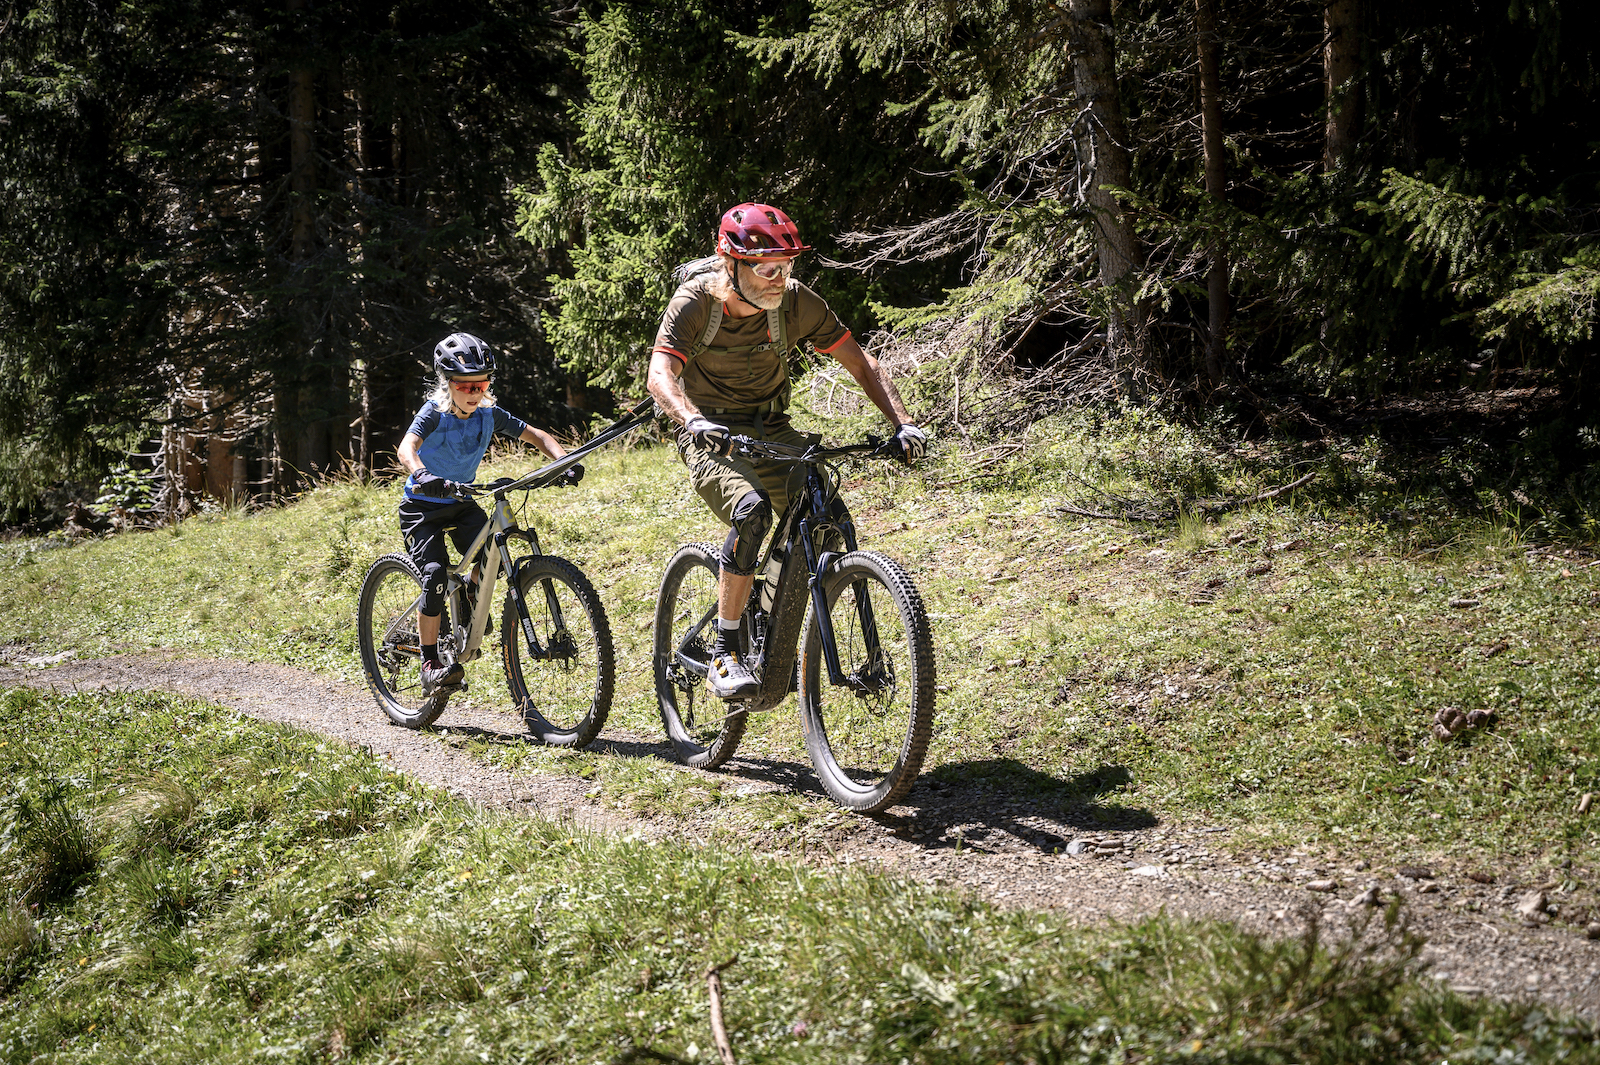 Hih Family Shooting Scott Sports Bike 2020 By Andreas Vigl 32